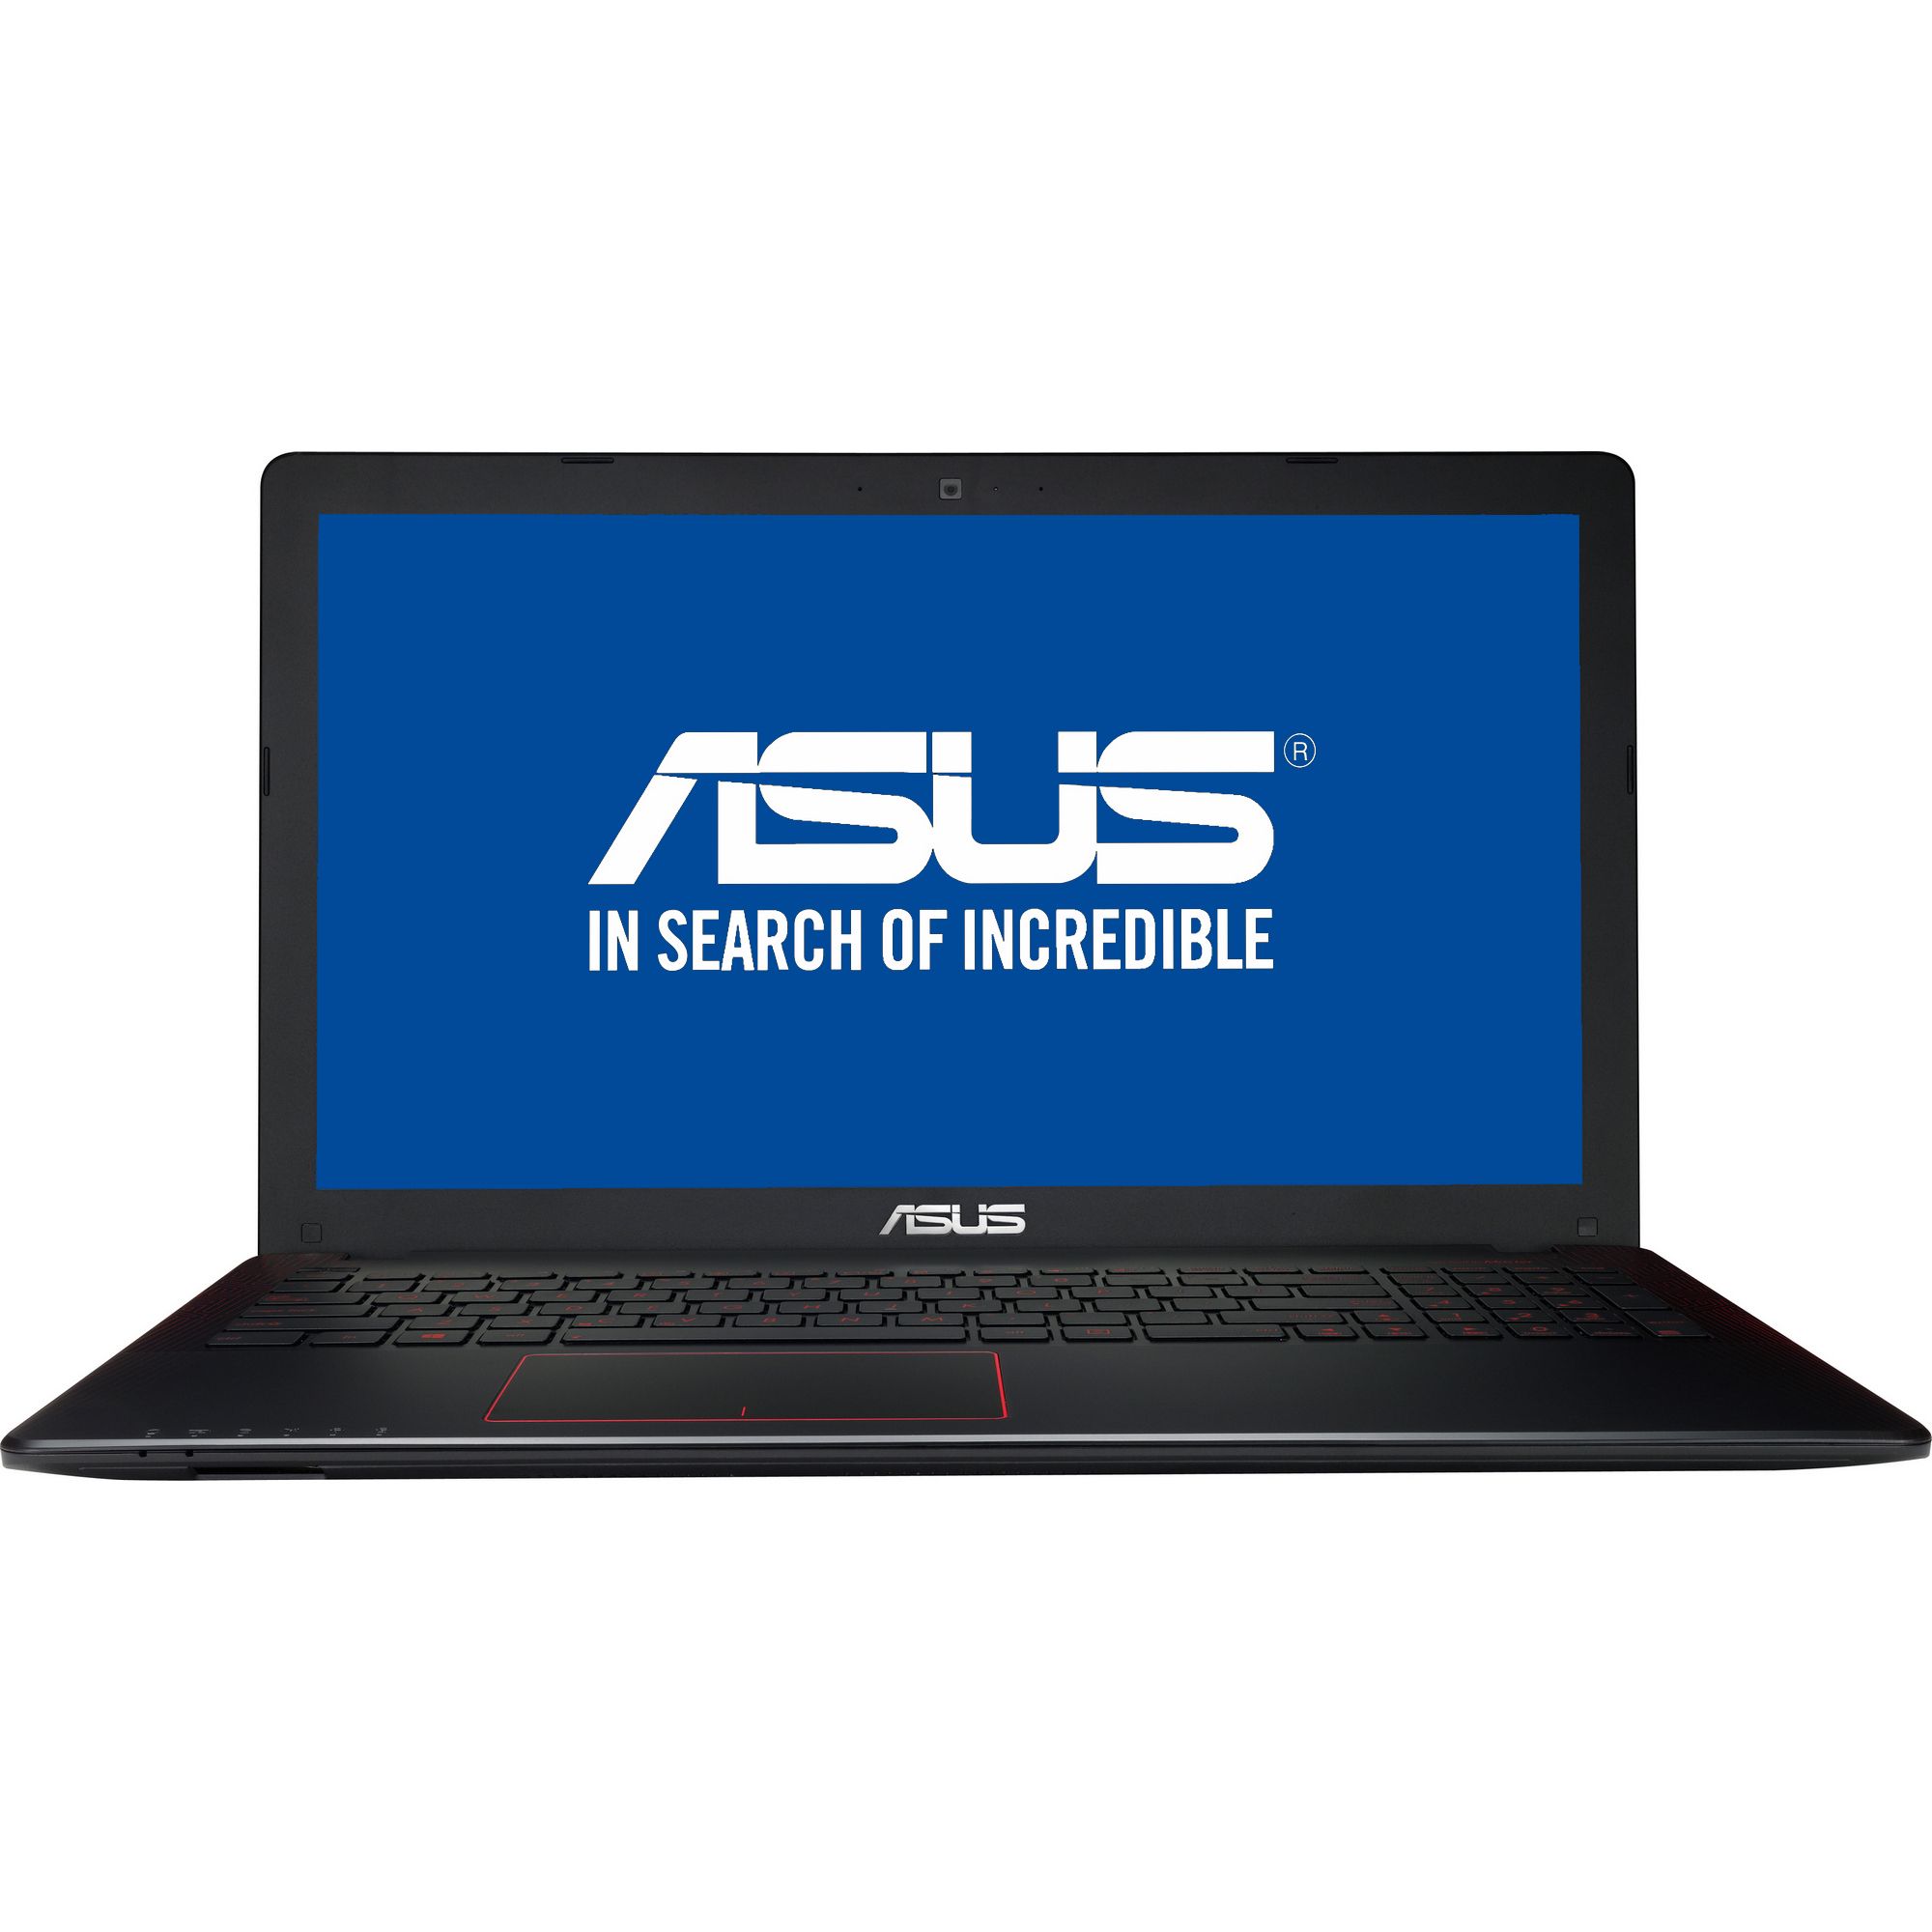  Laptop Asus R510VX-DM151D, Intel Core i7-6700HQ, 8GB DDR4, HDD 1TB, nVidia GeForce GTX 950M 4GB, Free DOS 